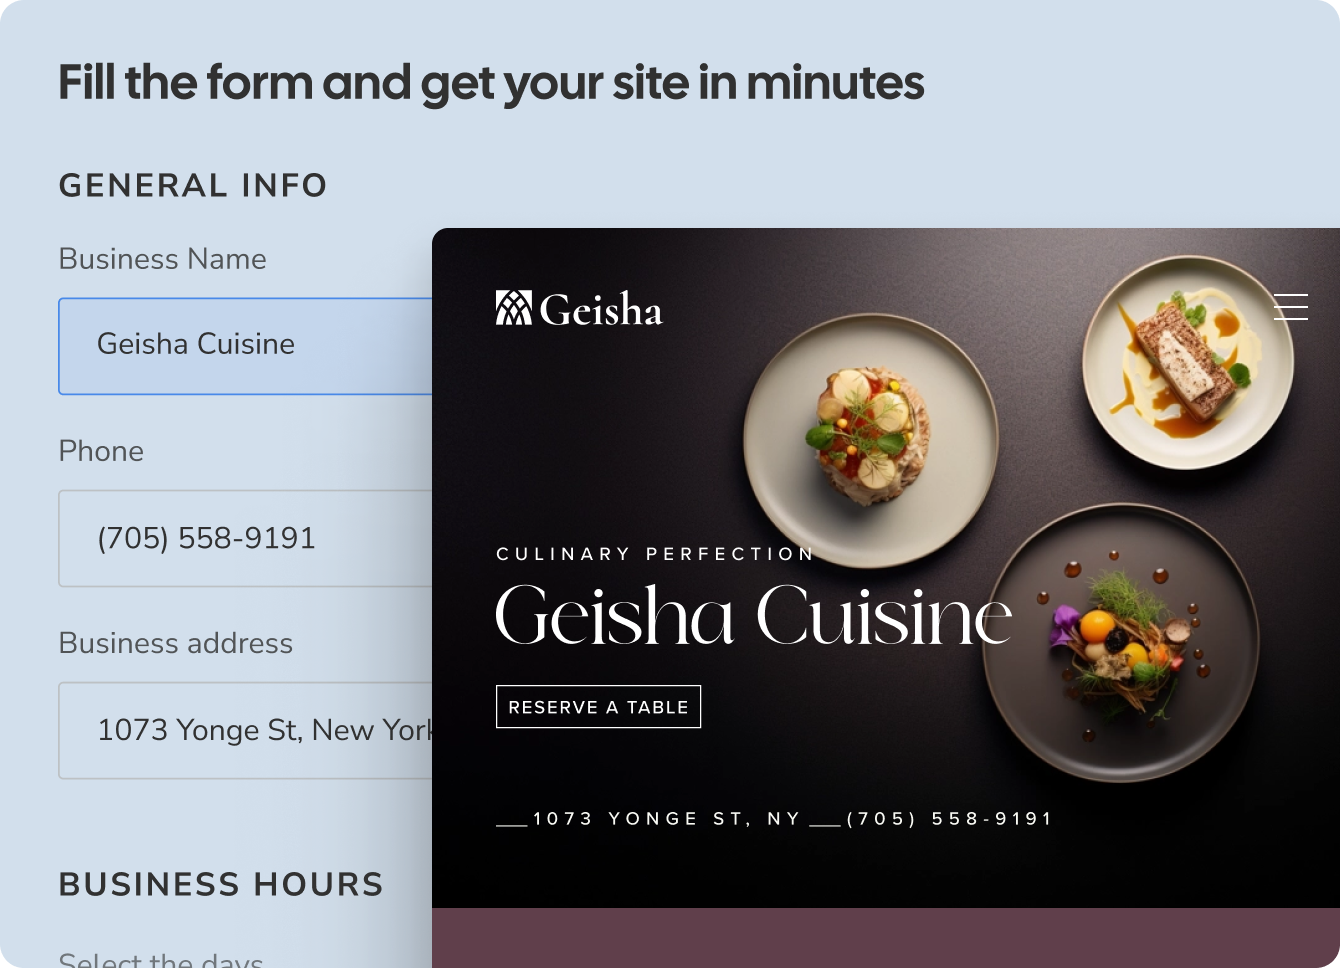 A screenshot of a website for a restaurant called geisha cuisine